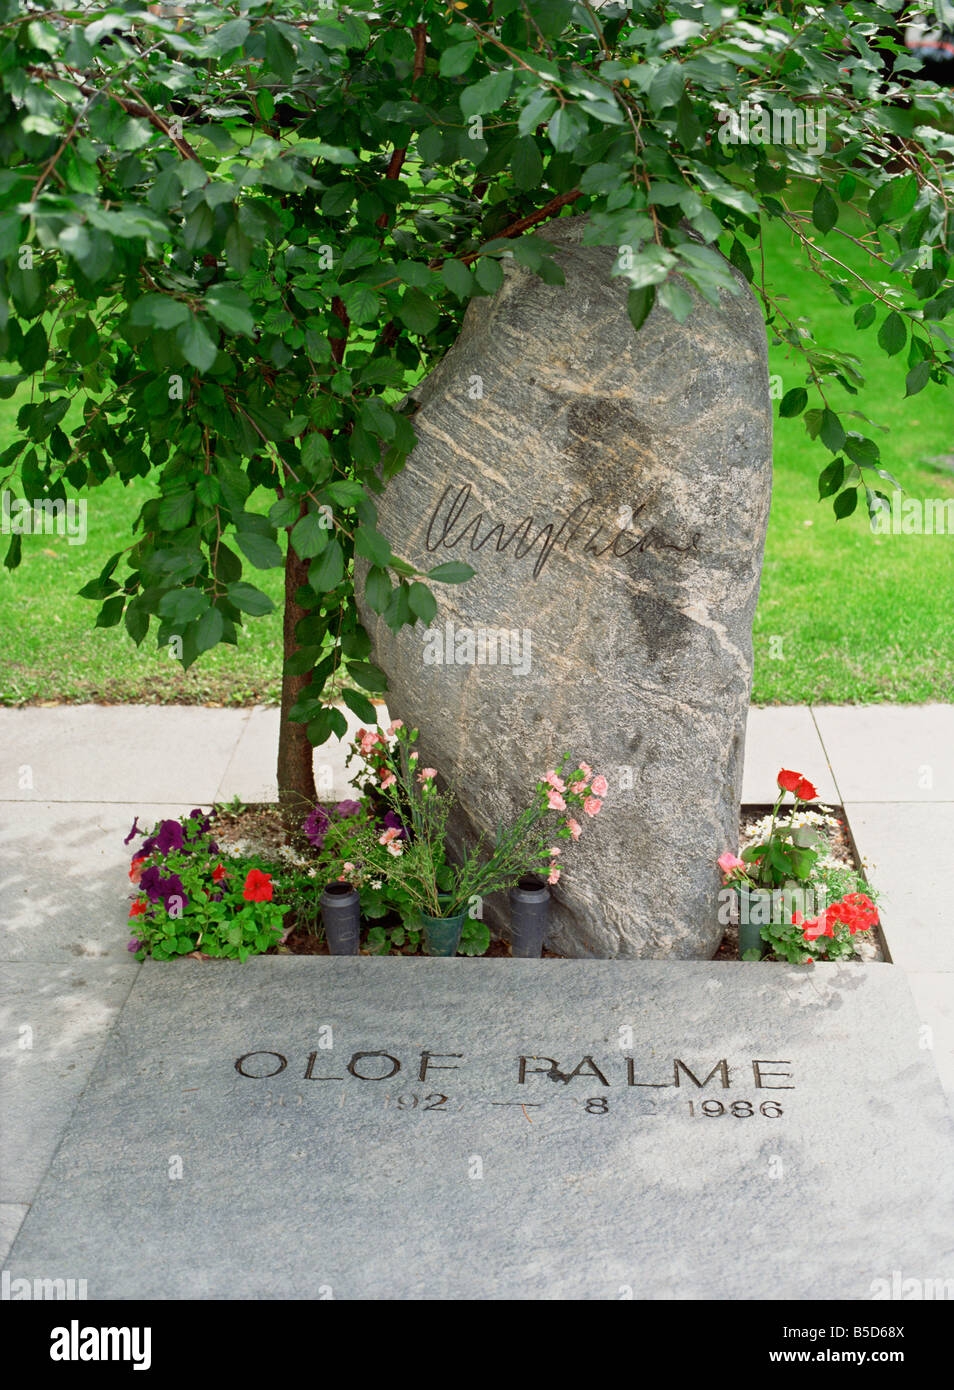 Grave of Olof Palme Swedish prime minister murdered in 1986 Adolfs Kirke Stockholm Sweden Scandinavia Europe Stock Photo